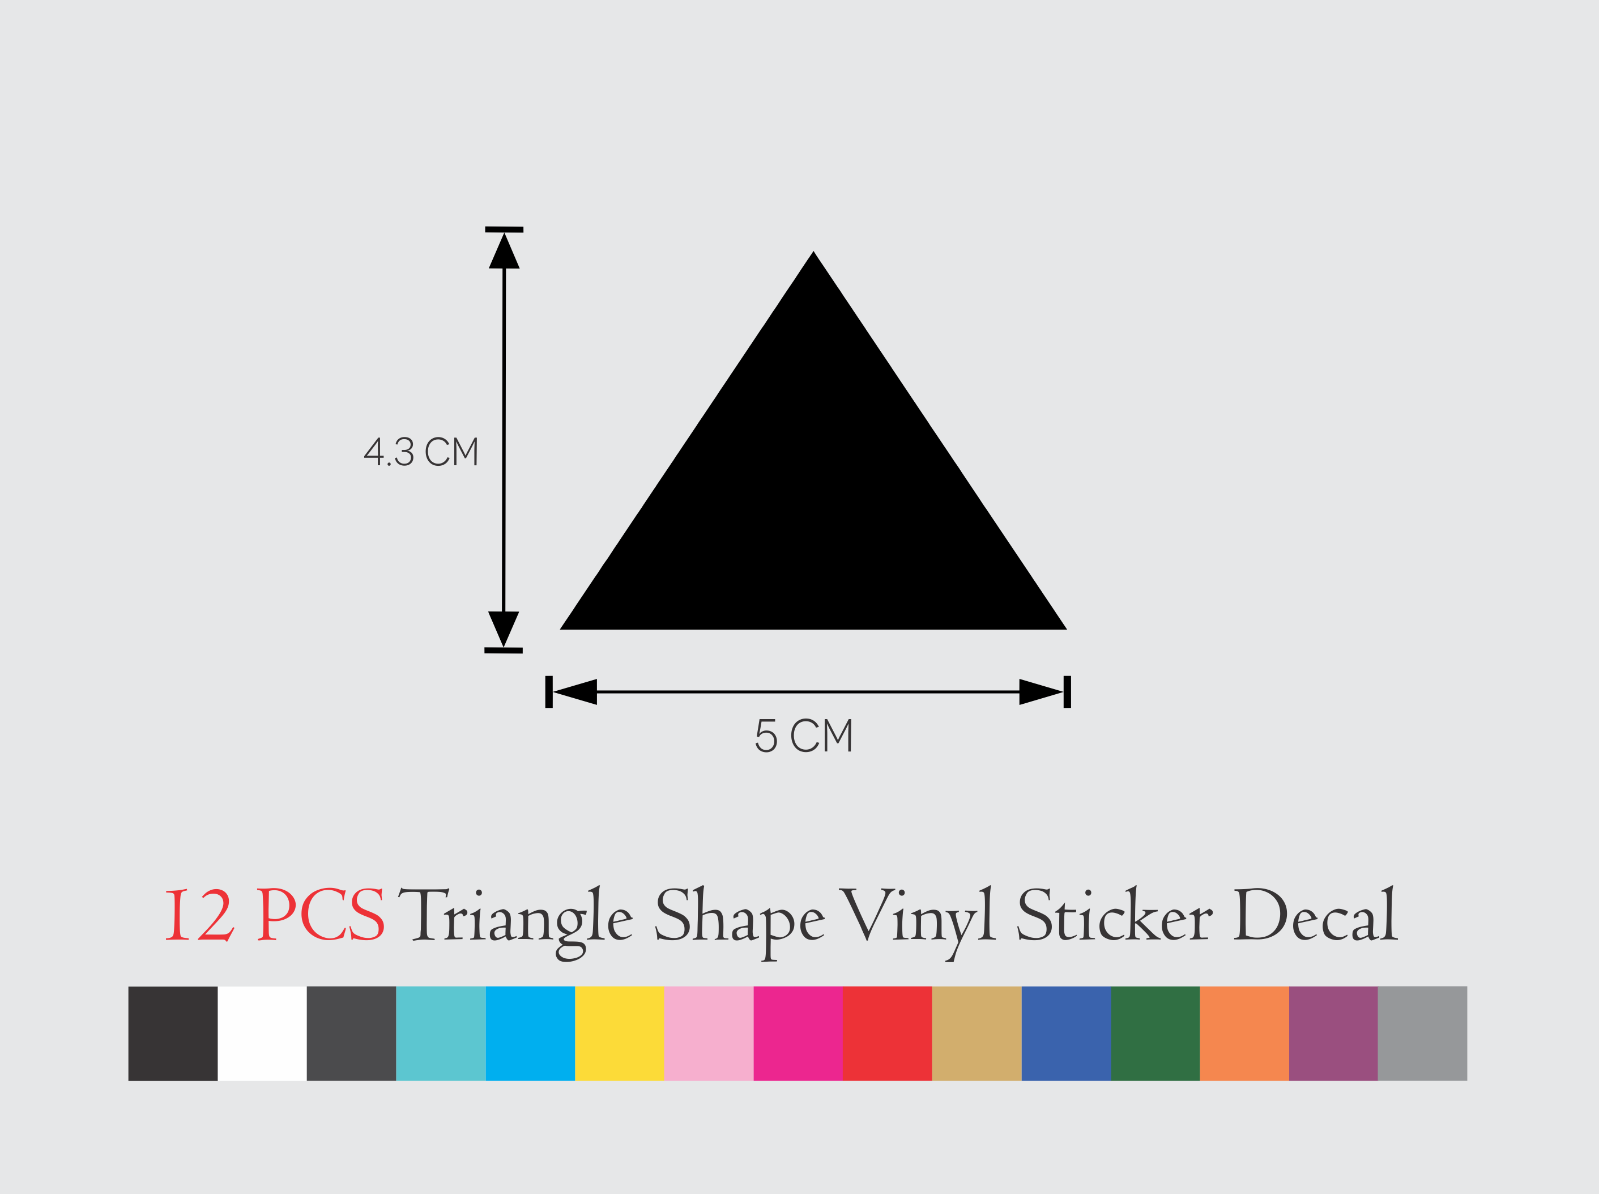 12 PCS Triangle Shape Vinyl Decal Sticker 2 Inch set - $12.19 - $15.88